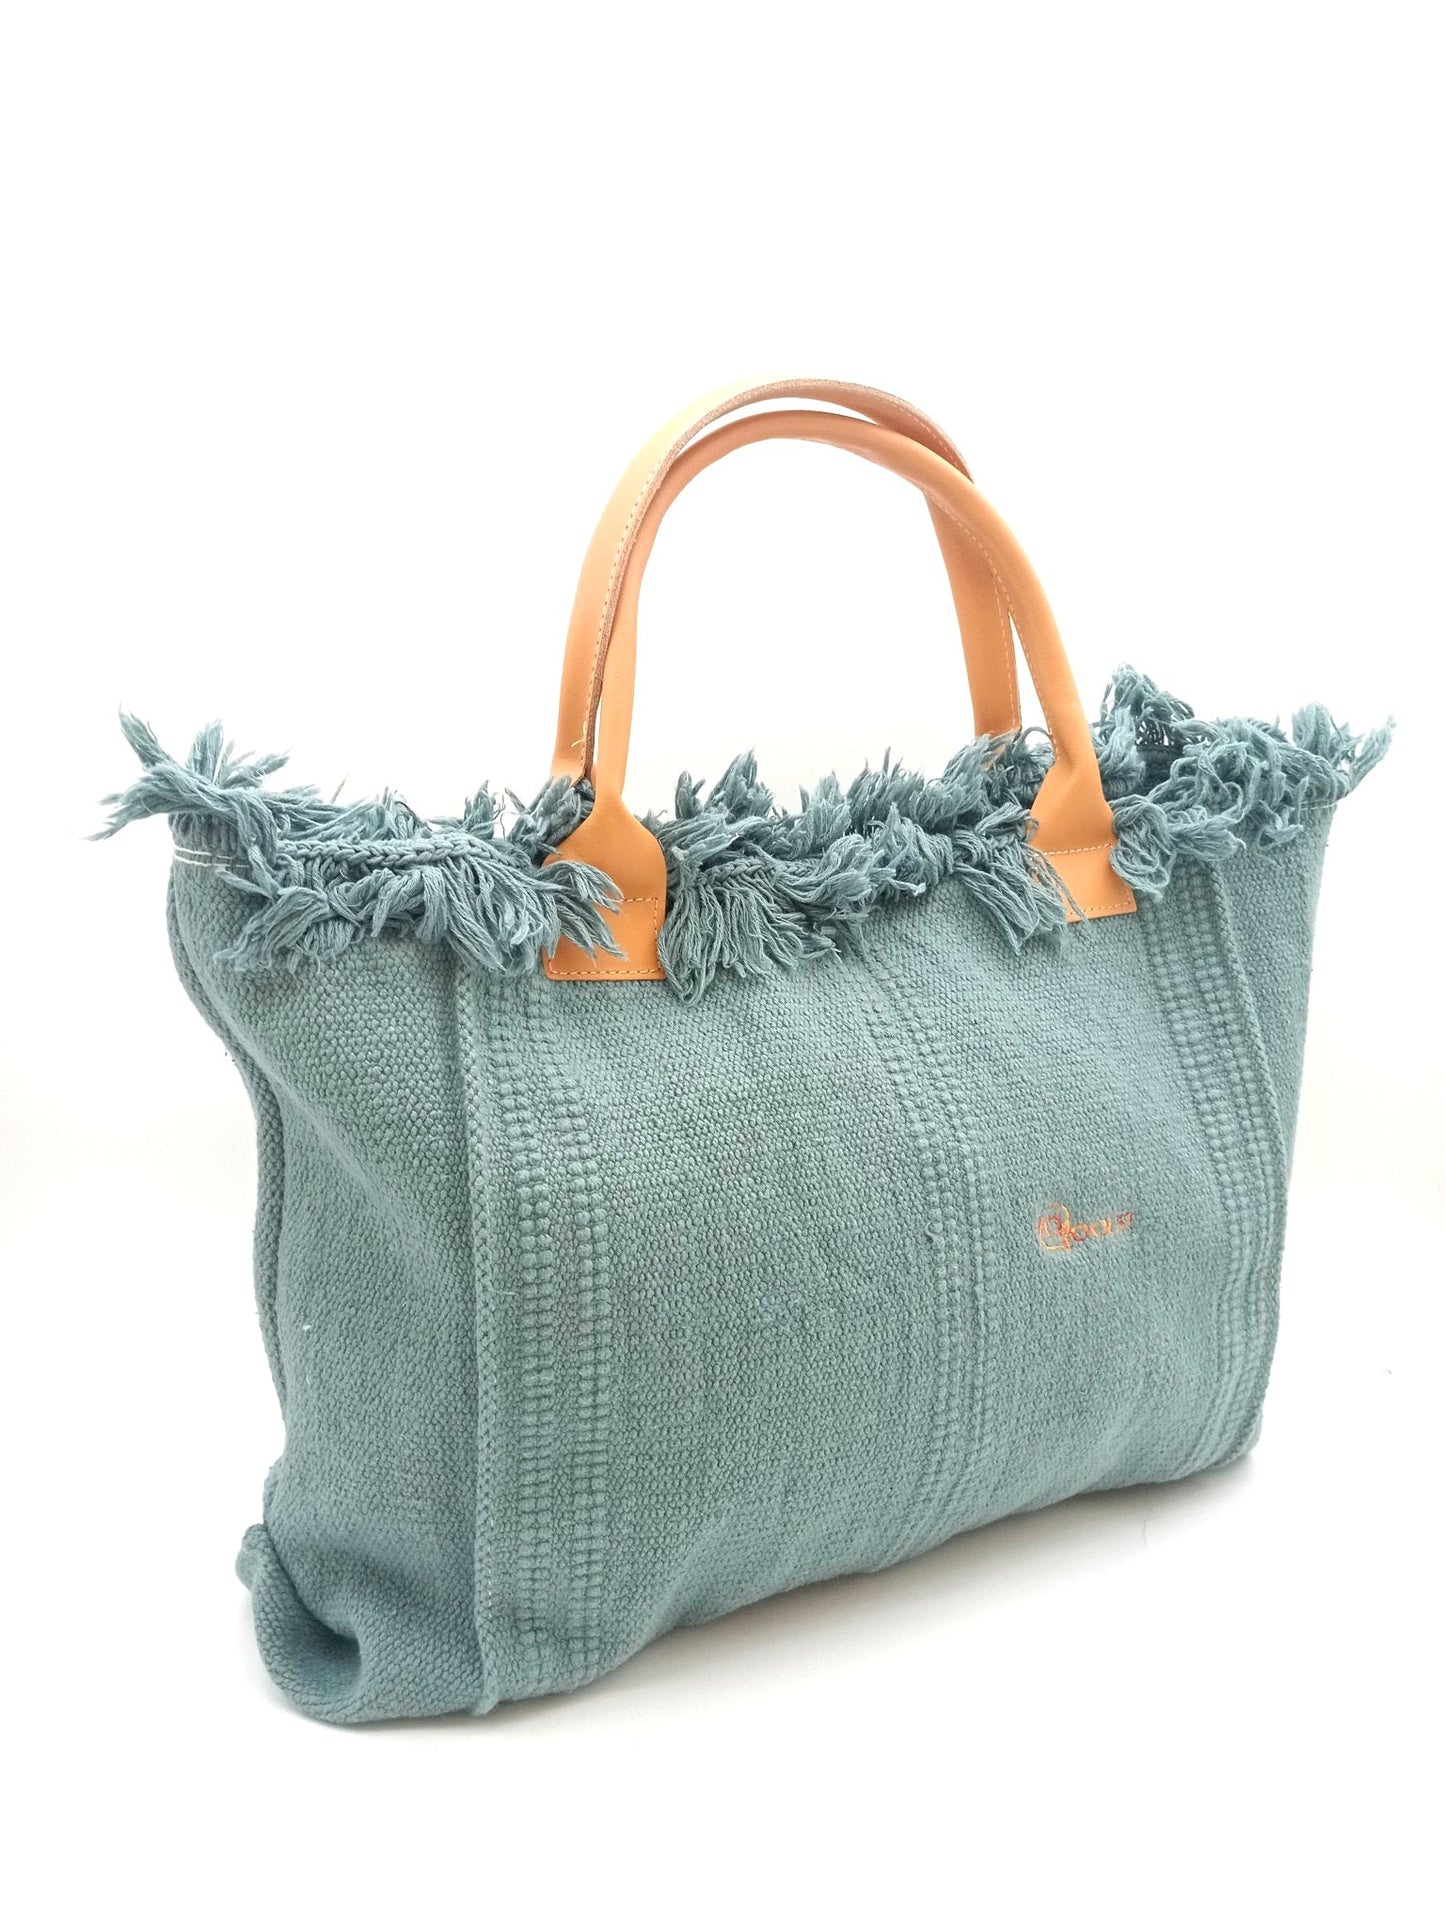 Qoolst Shopper XL cotton women's bag with handle